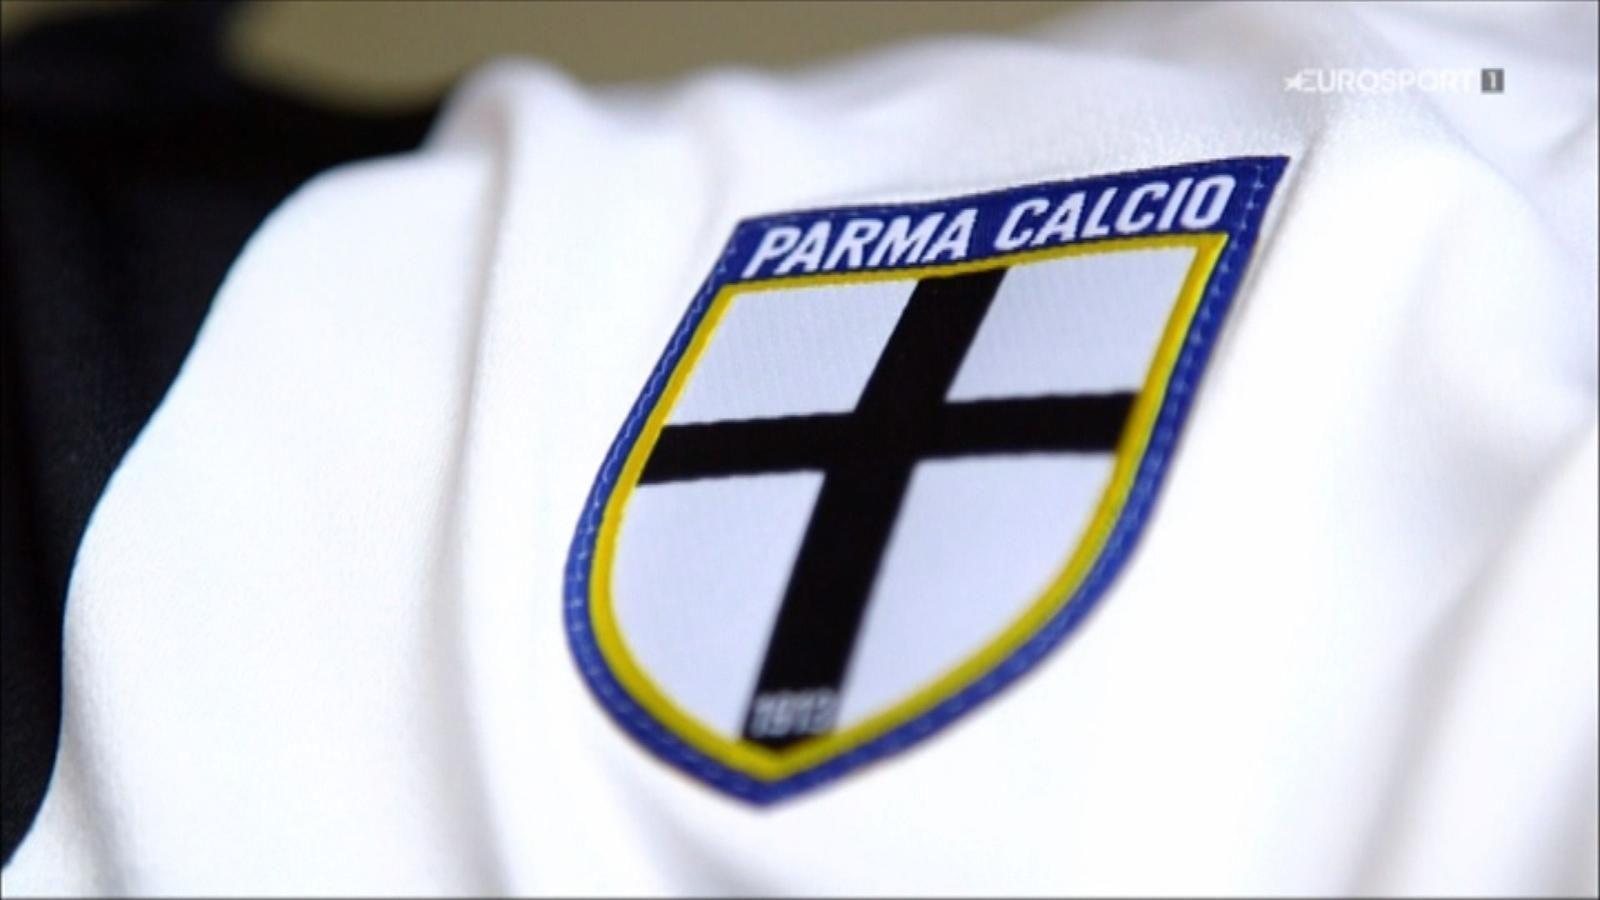 VIDEO football: Parma reborn after bankruptcy